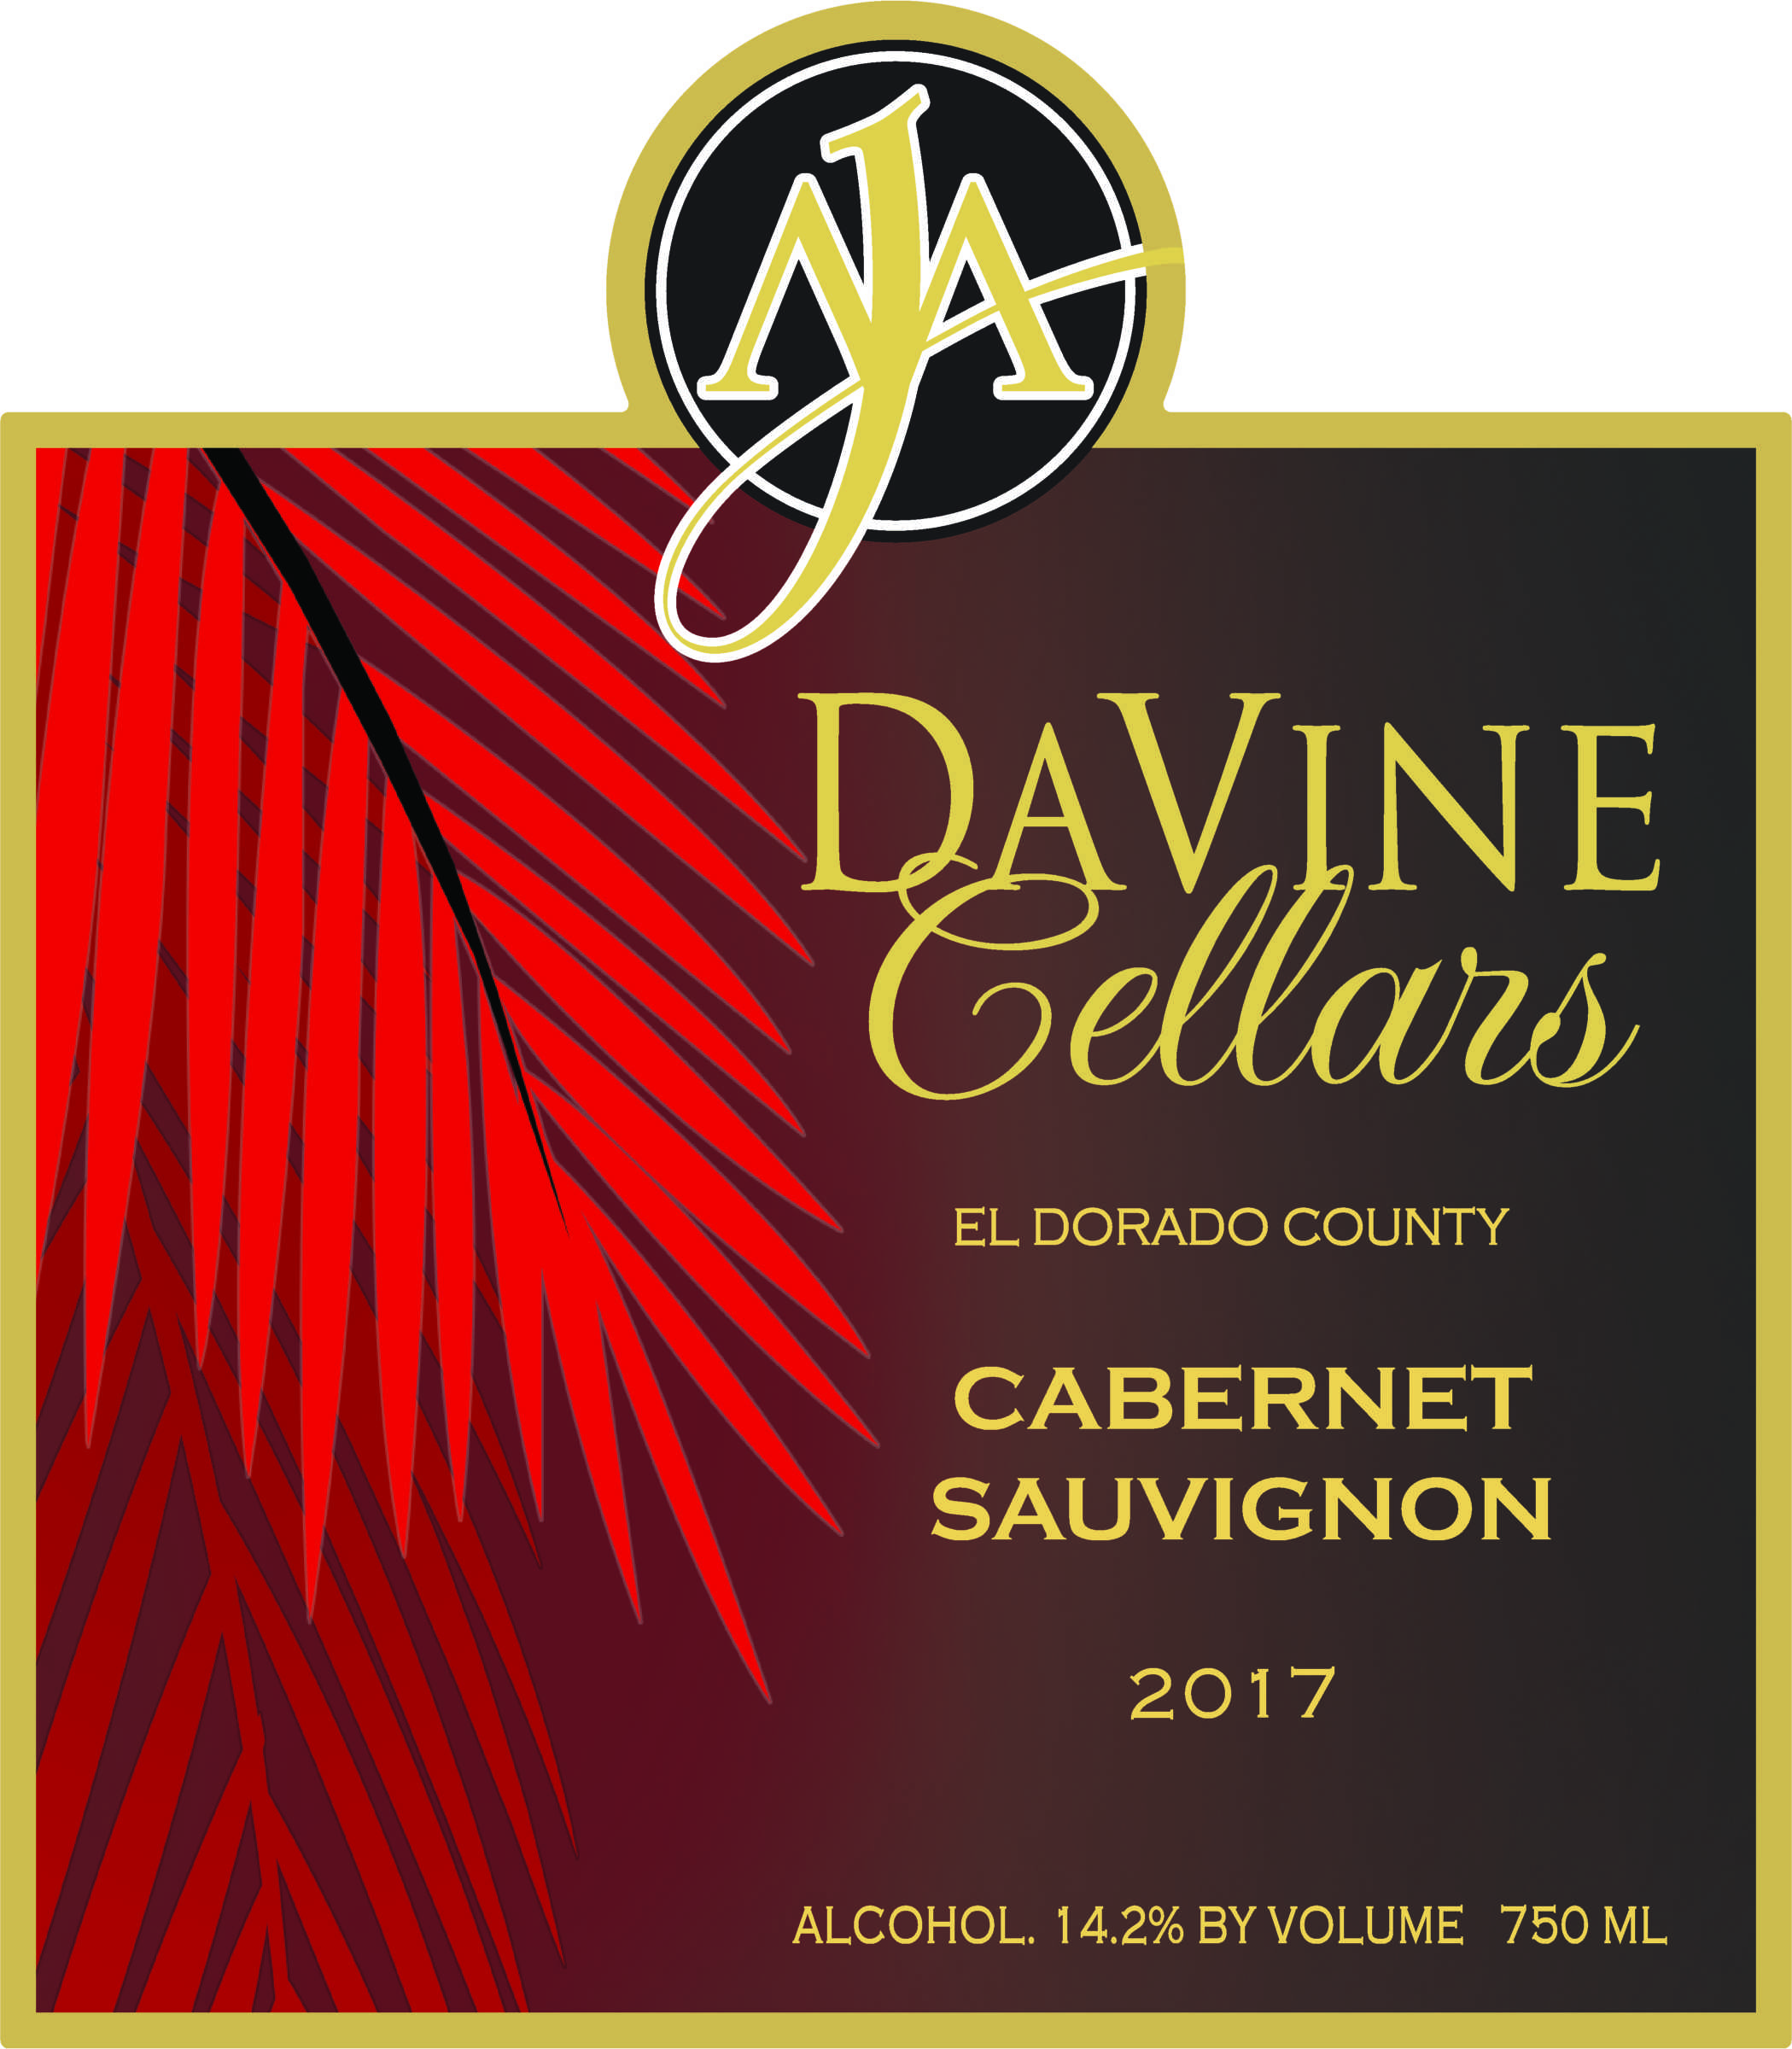 Product Image for 2017 El Dorado County Cabernet Sauvignon "Gaucho"